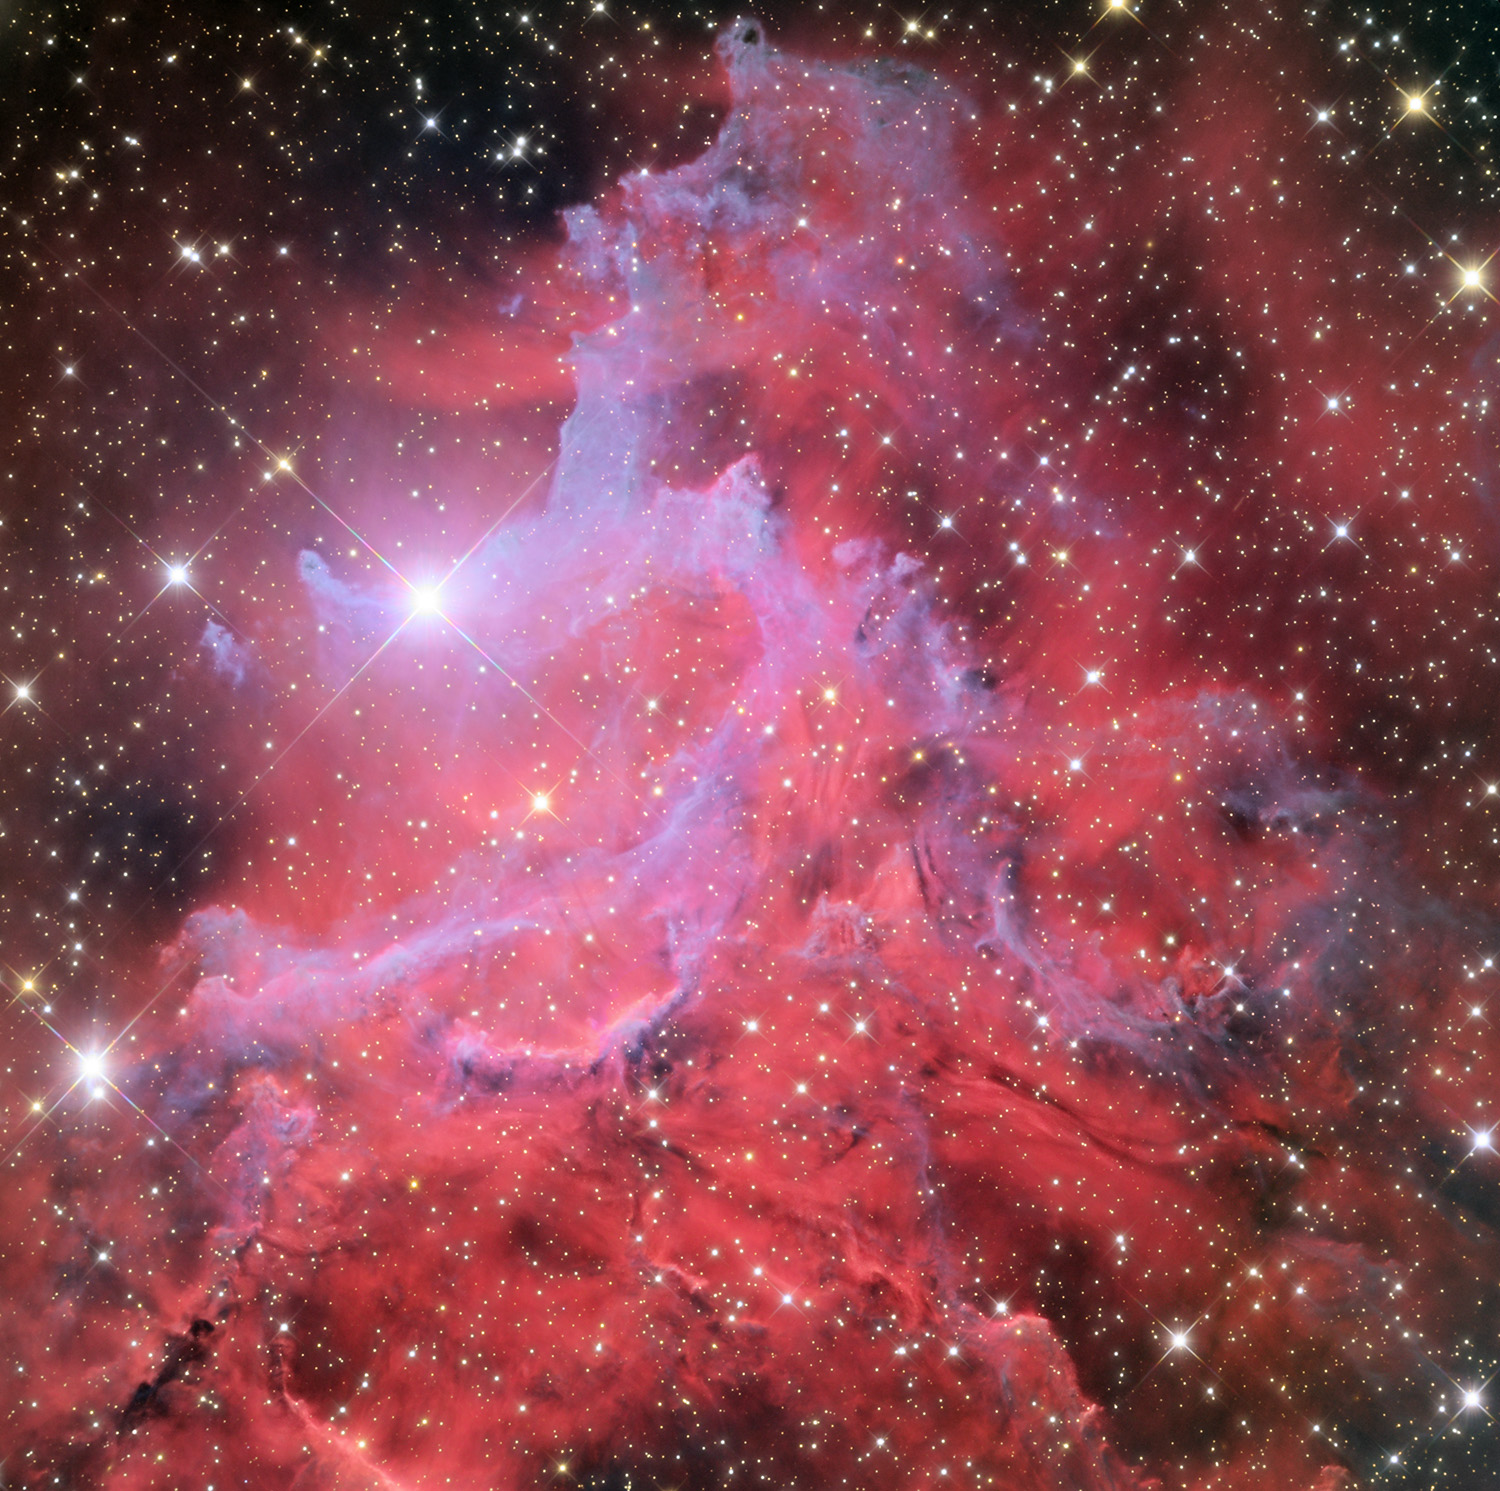 APOD: 2016 December 1 - Flaming Star Nebula